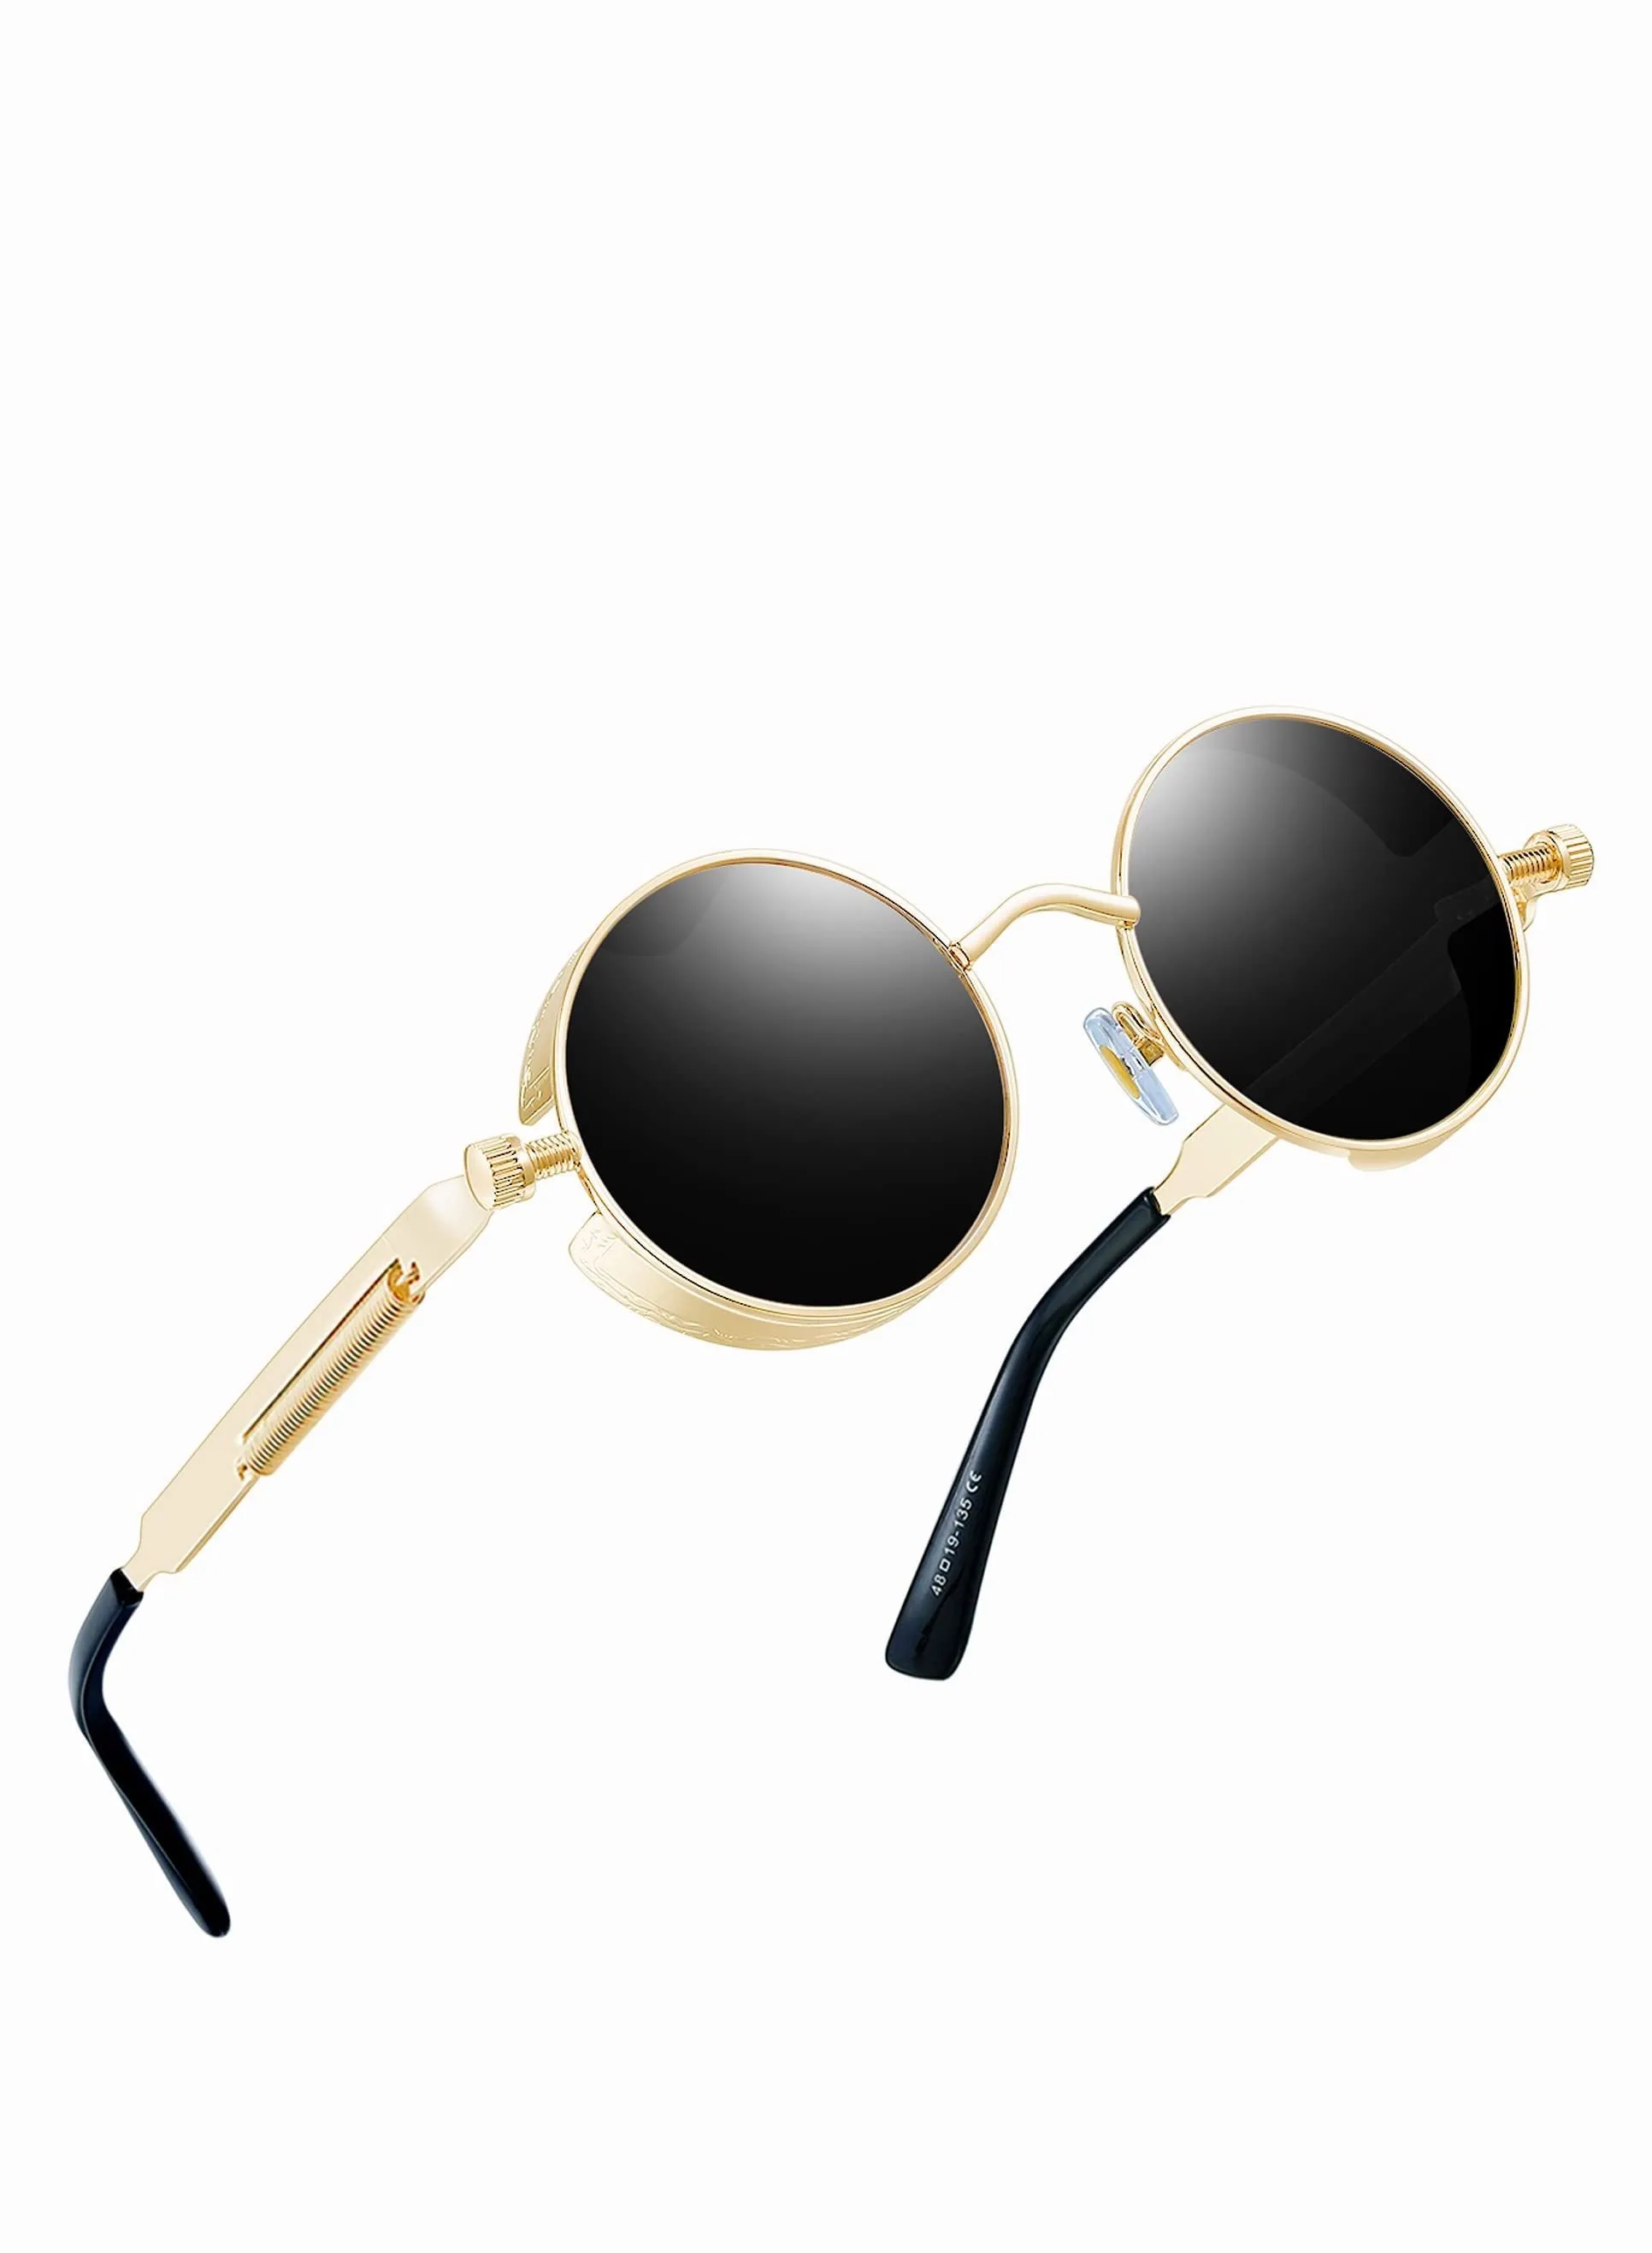 roaiss Men's Round Circle Steampunk Sunglasses